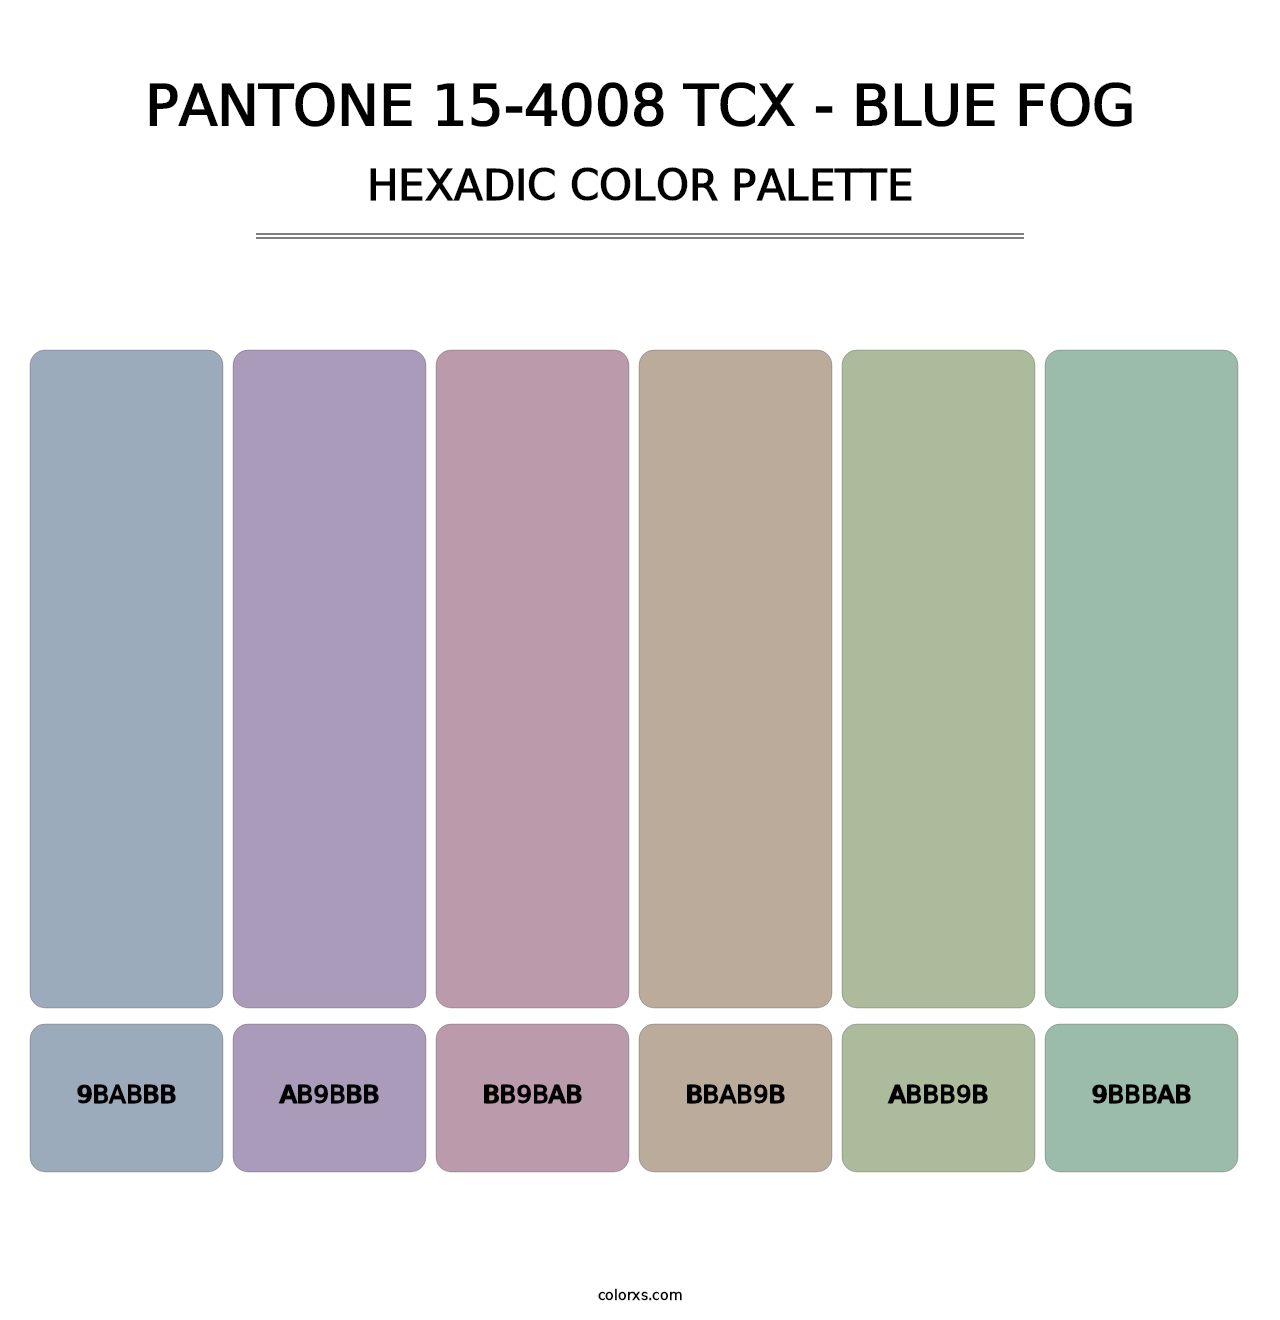 PANTONE 15-4008 TCX - Blue Fog - Hexadic Color Palette